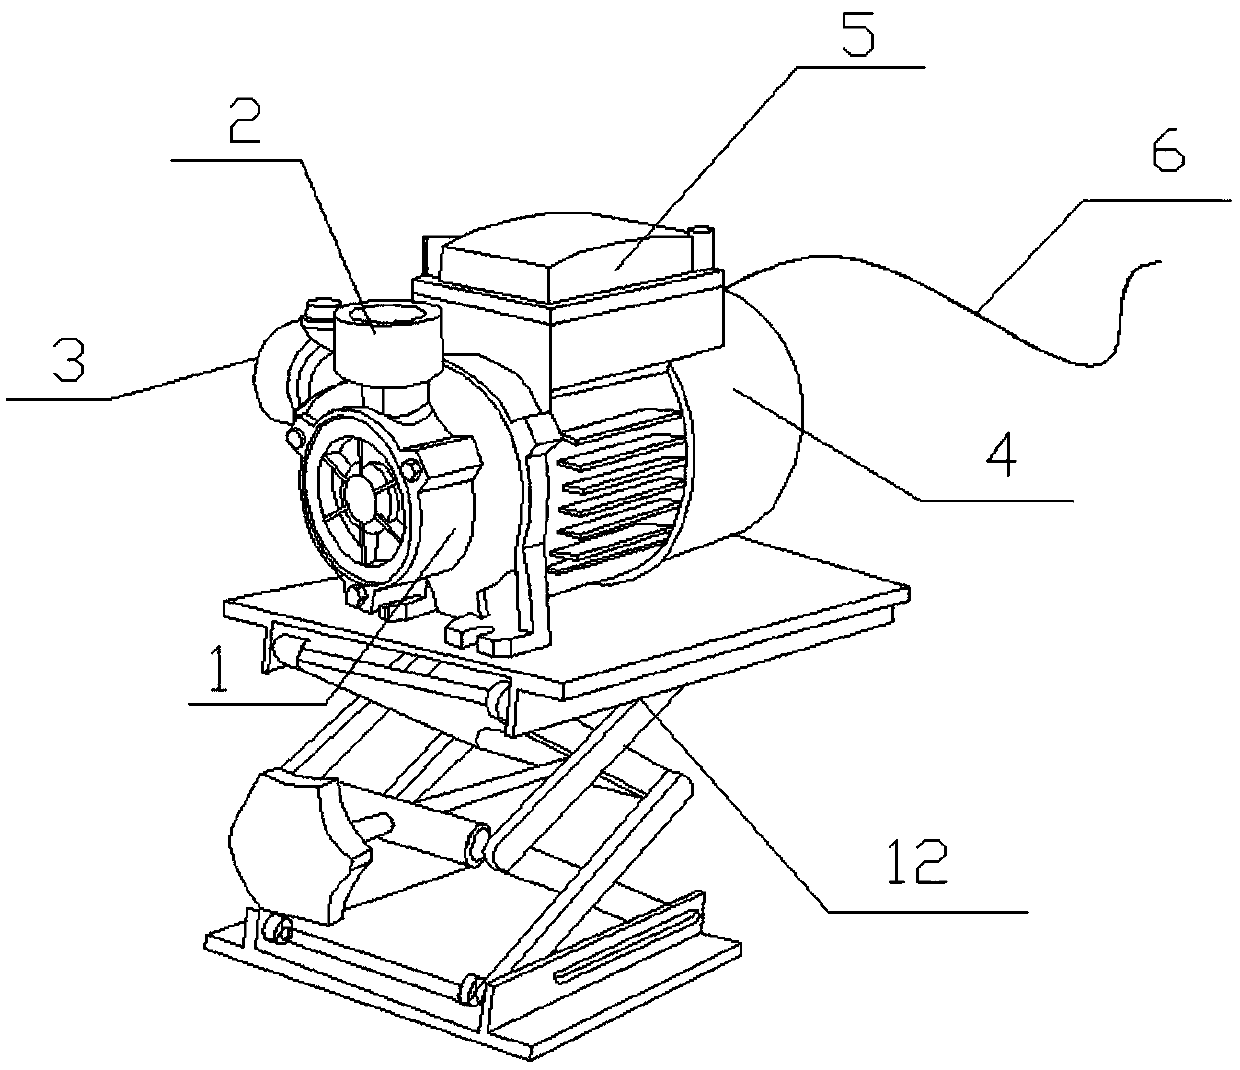 Novel rotatable and liftable water pump